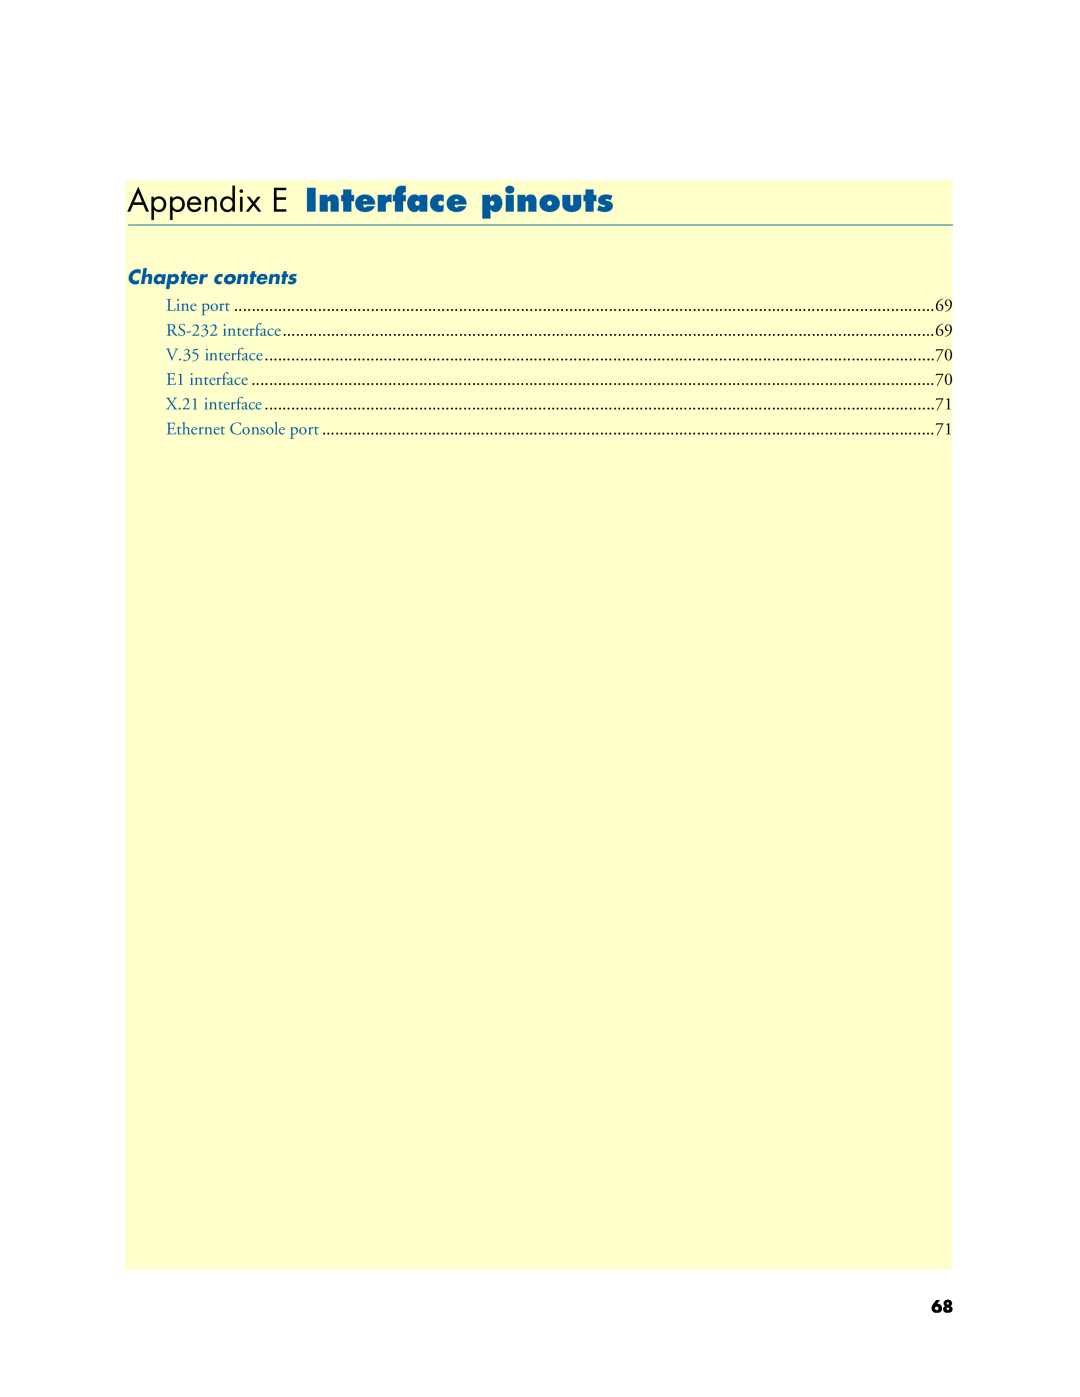 Patton electronic 3088A manual Appendix E Interface pinouts, Chapter contents, Line port, RS-232 interface, V.35 interface 